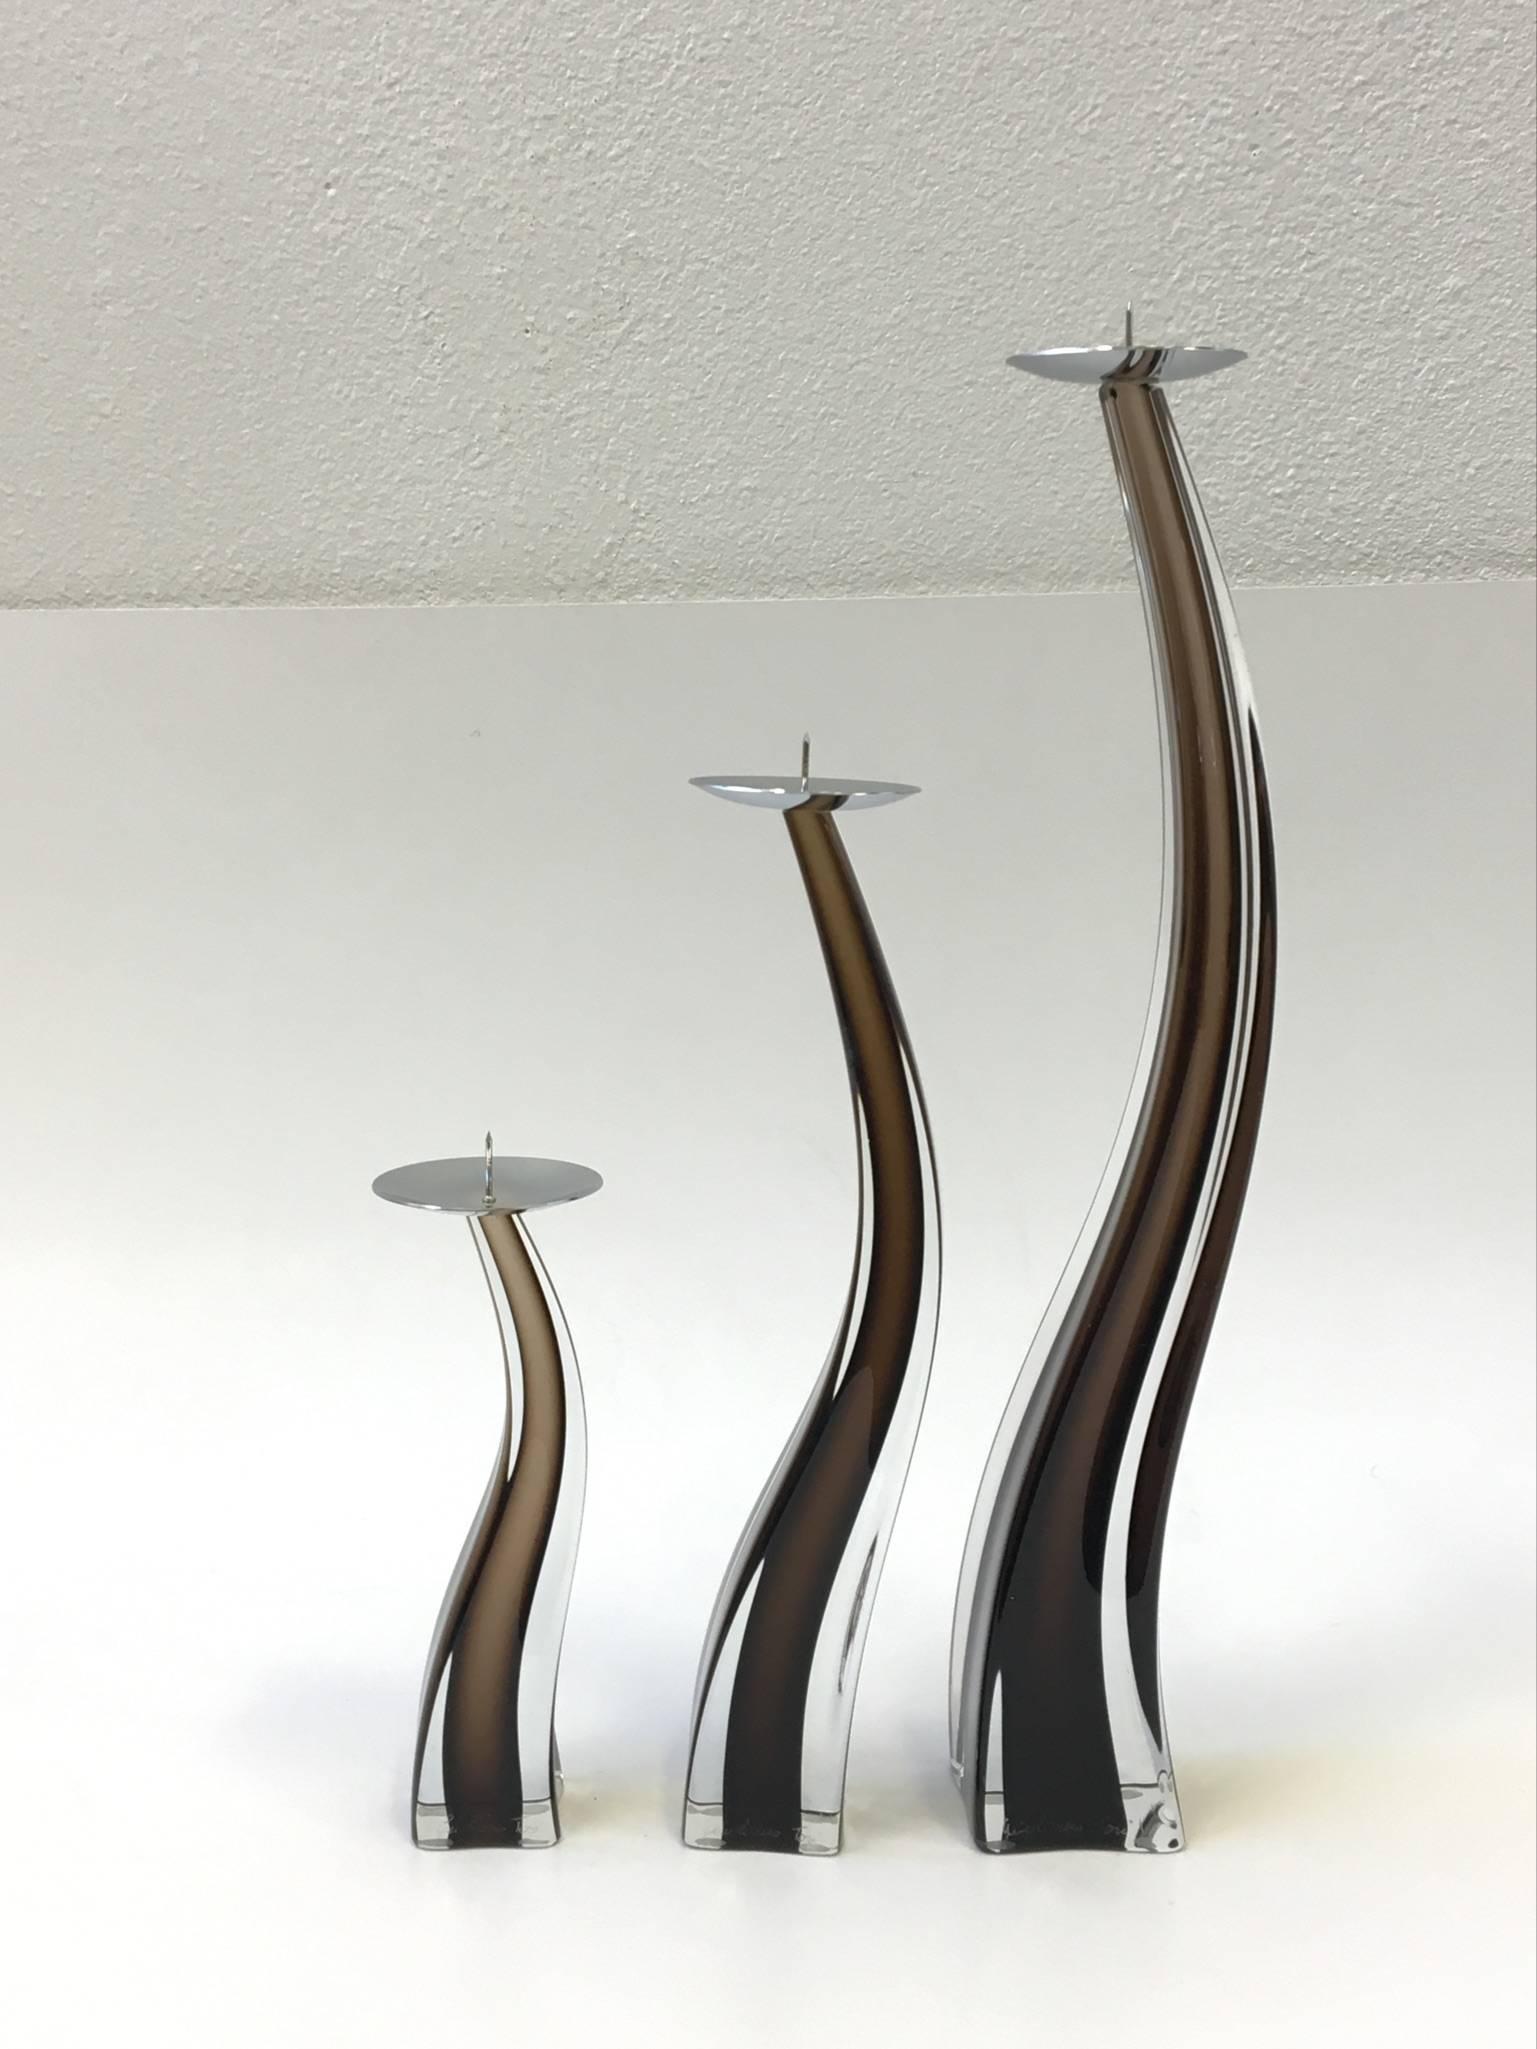 A set of three handblown Murano glass candlesticks designed by Giuliano Tosi for Oggetti in the 1980s.
All three candle sticks are signed by Giuliano Tosi and retain the Oggetti tag.
Dimensions:
Large 17.5